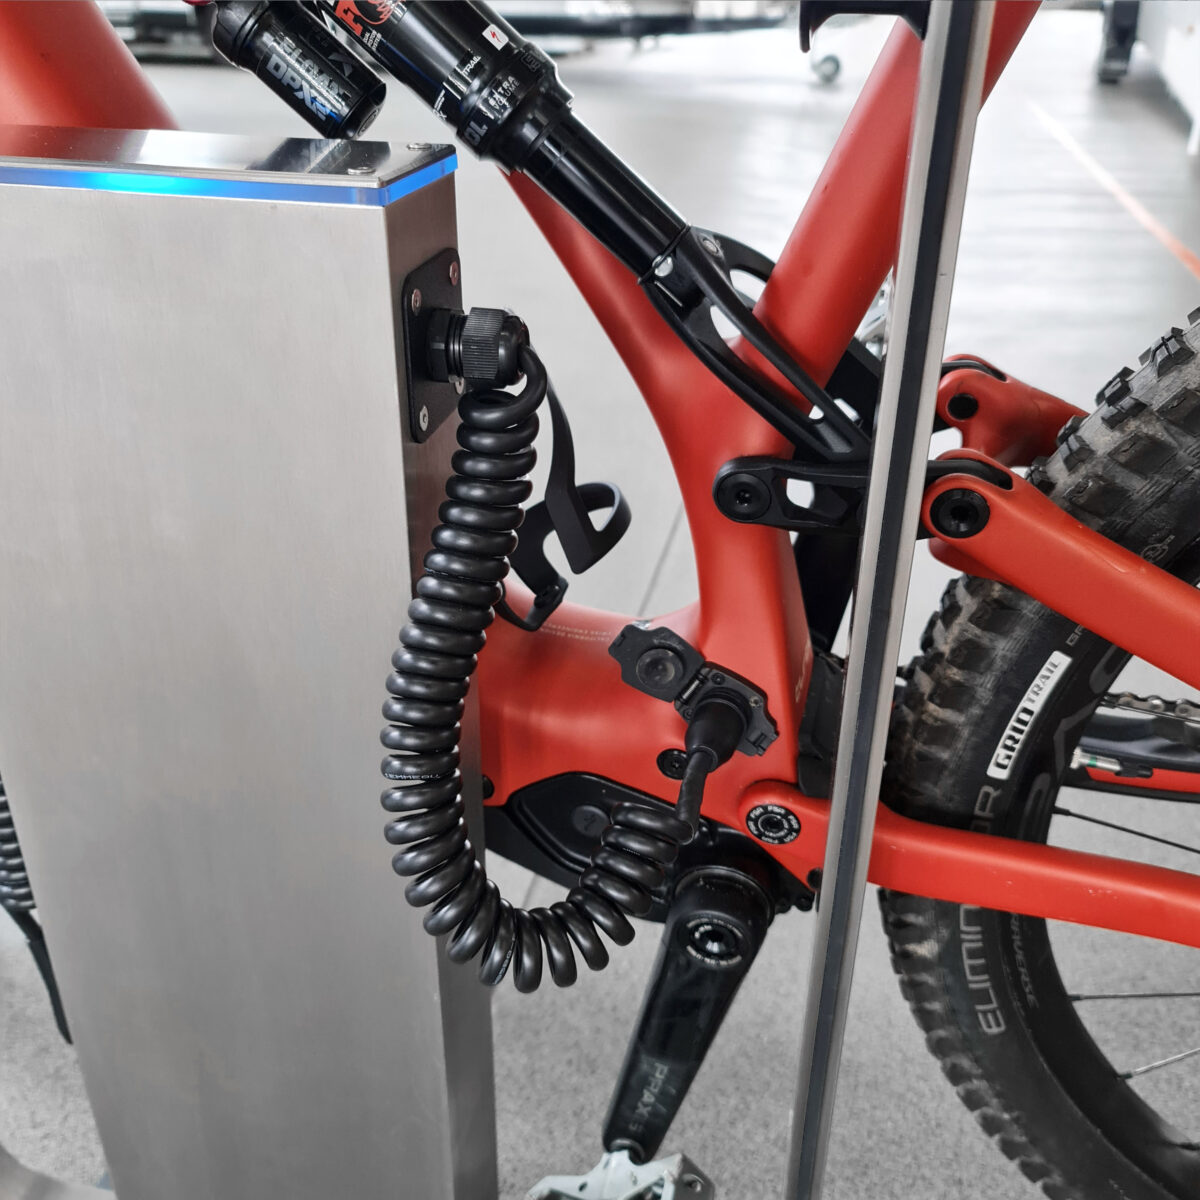 QRACK E Charger Smart charger integriert Stecker mit Spiralkabel, für verschiedene E-Bike System